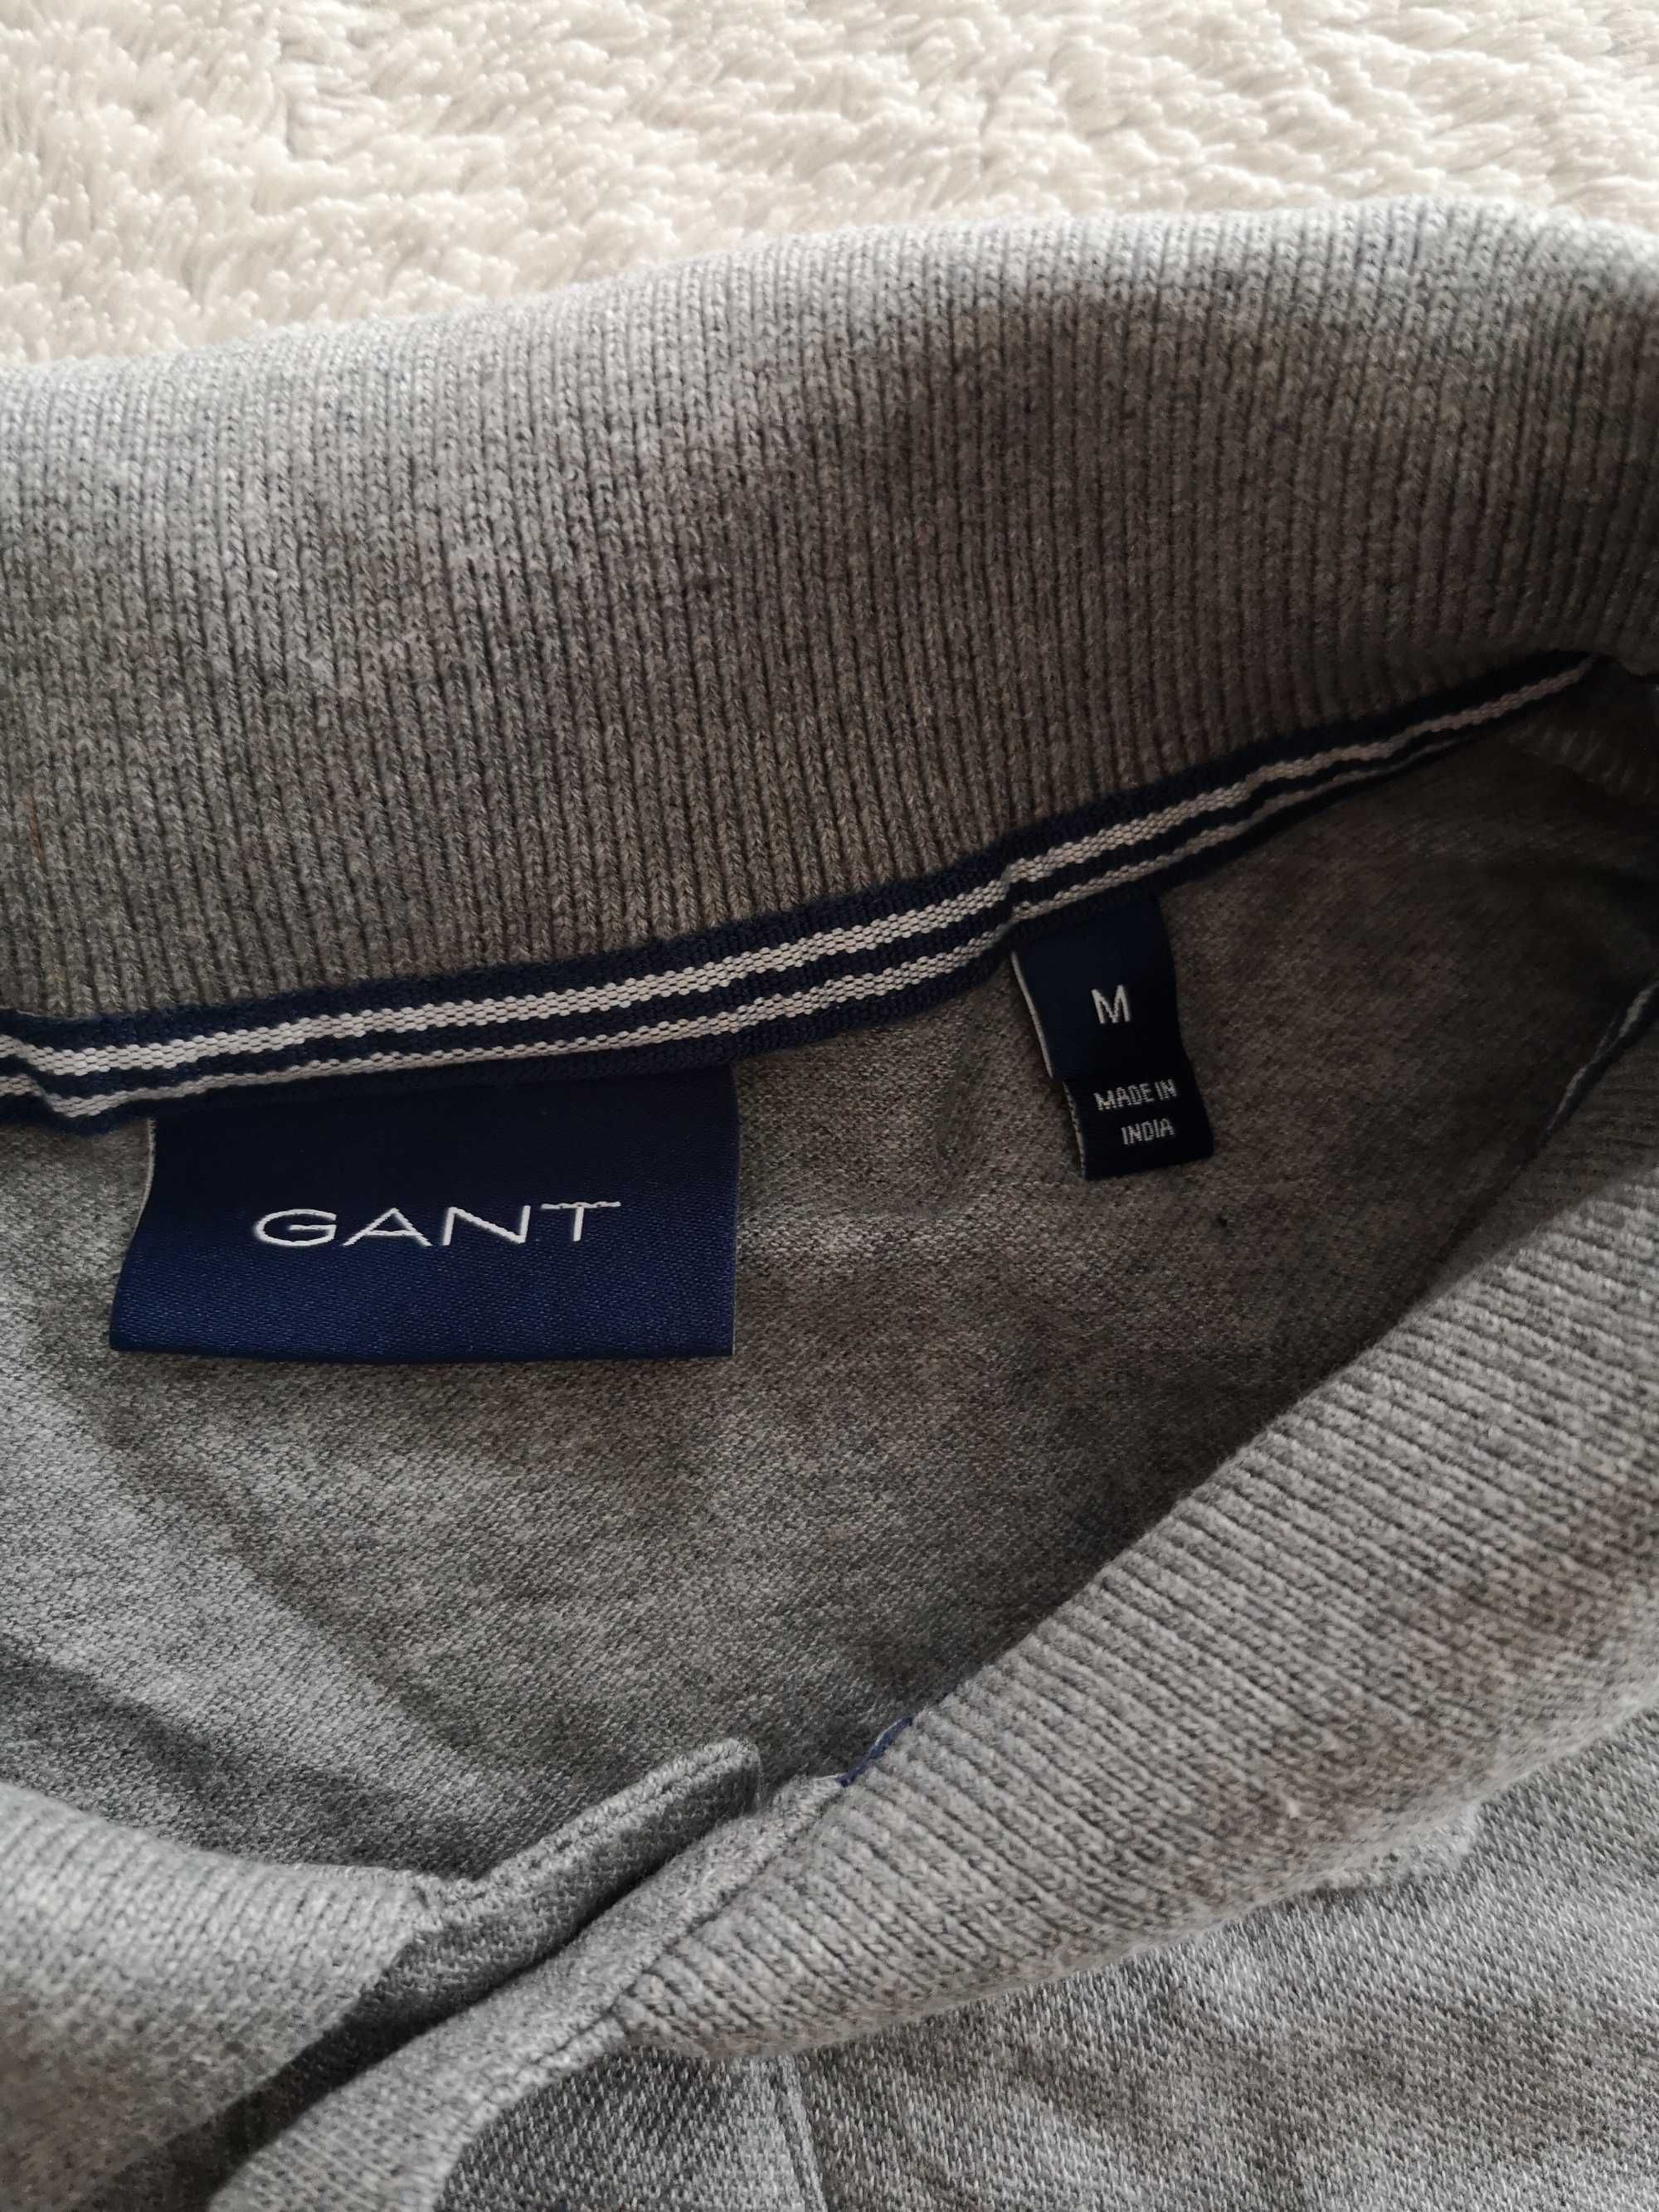 Szara elegancka bluzka koszulka polo Gant 38 48 jak nowa